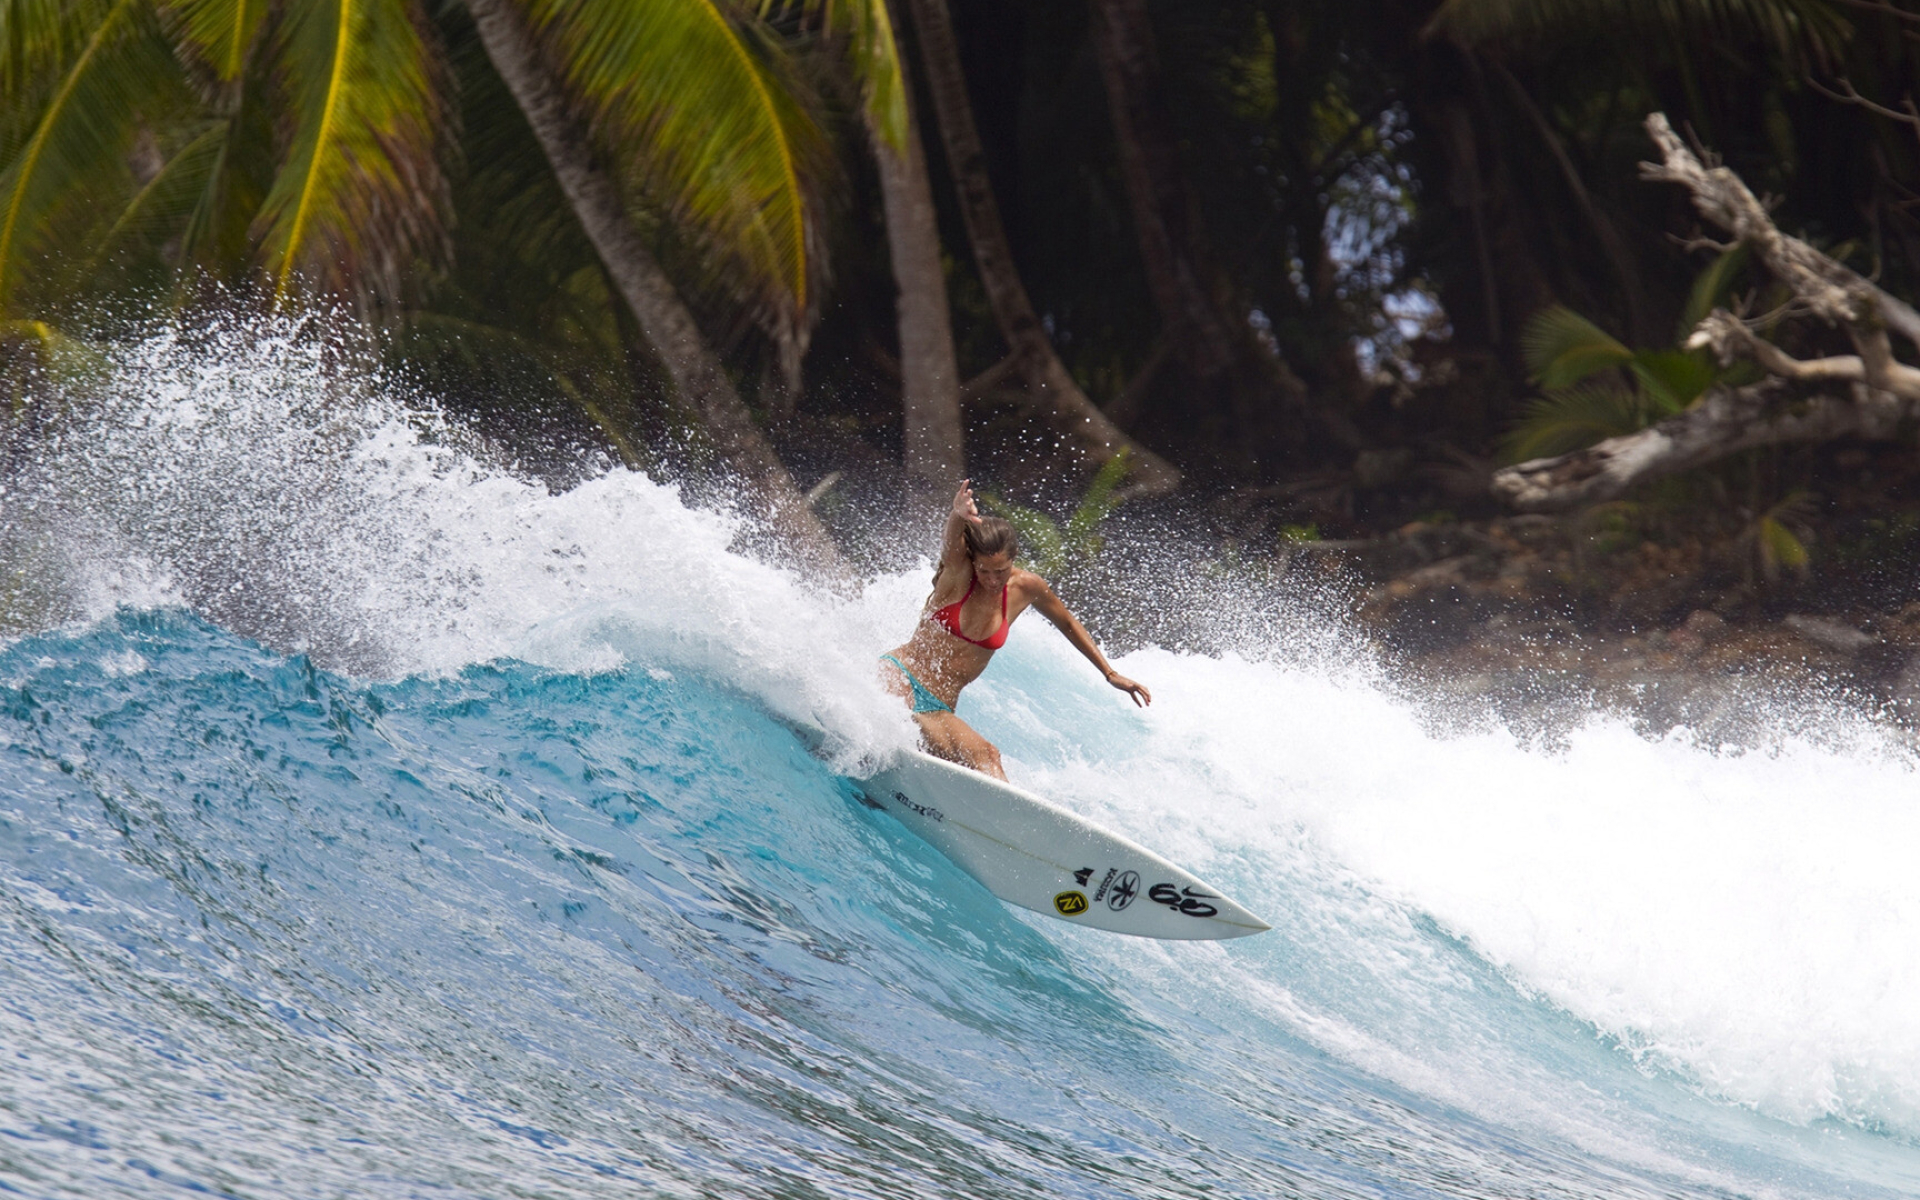 Girl Surfing: Beginner's surf trick, Recreational water sports training, Surfboarding classes. 1920x1200 HD Wallpaper.